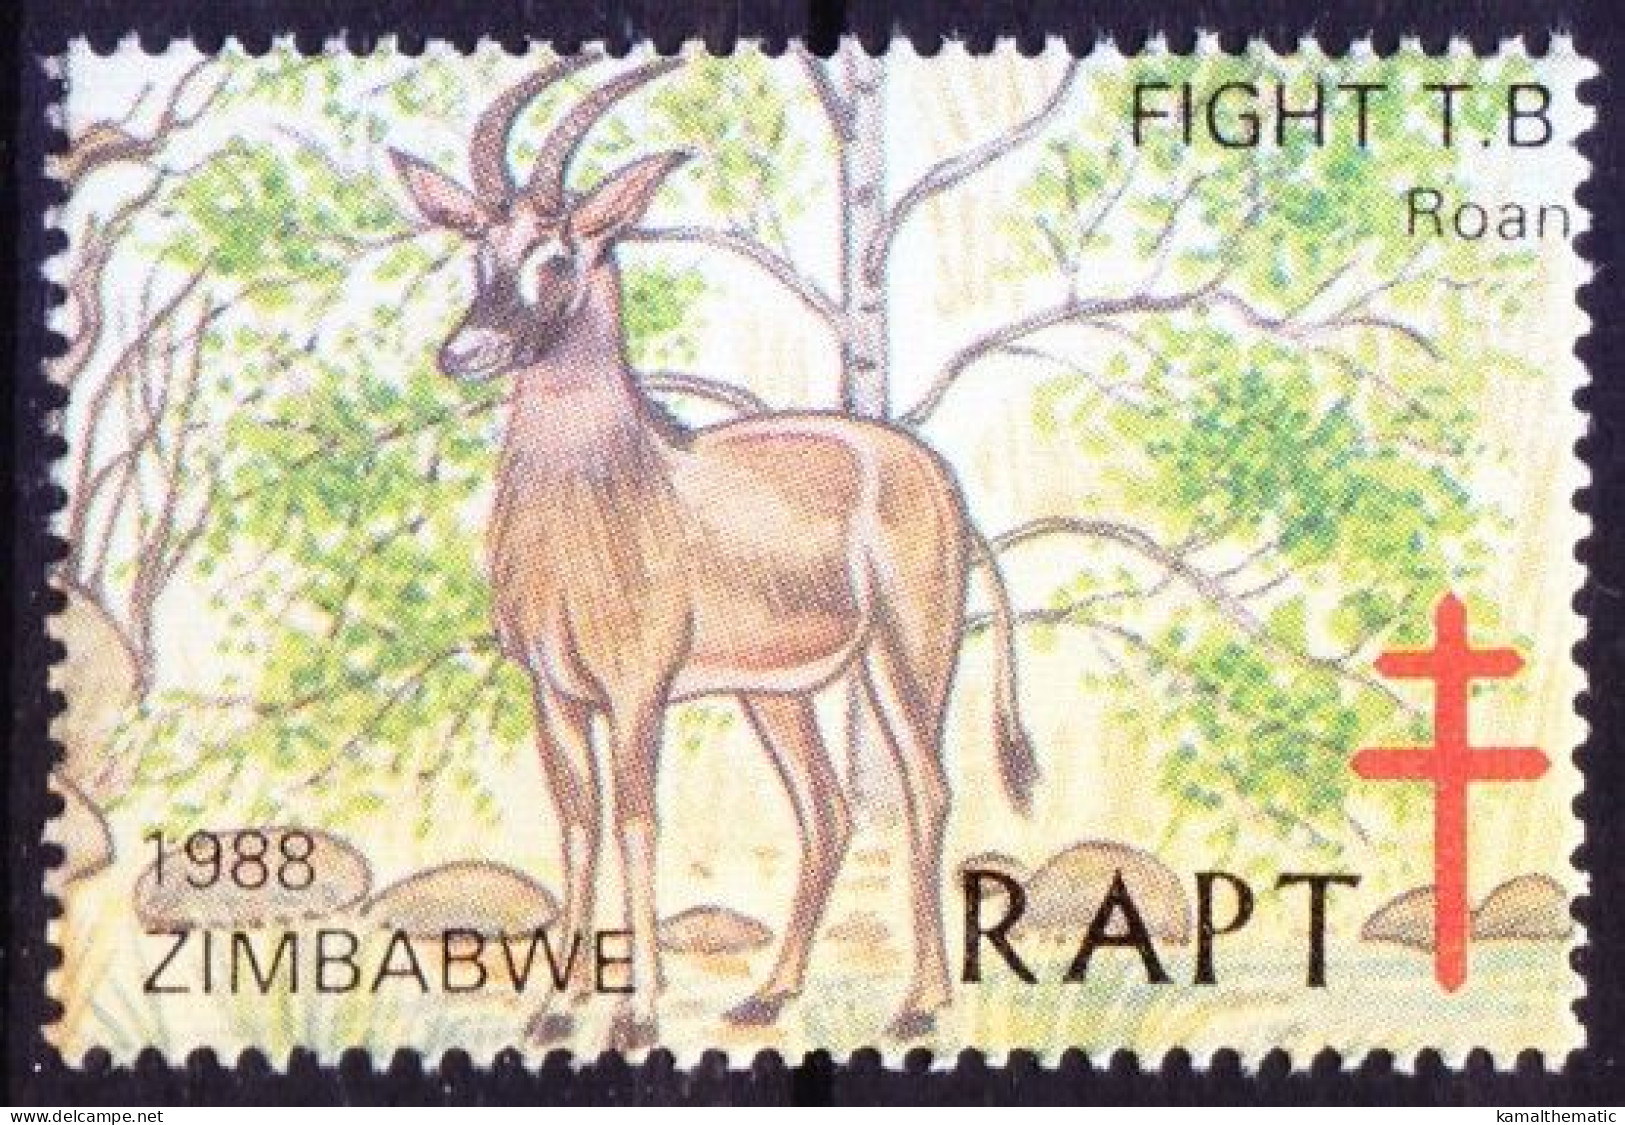 Zimbabwe 1978 MNH, Roan, Deer Animals, Help Fight TB, Seals Medical Disease - Enfermedades